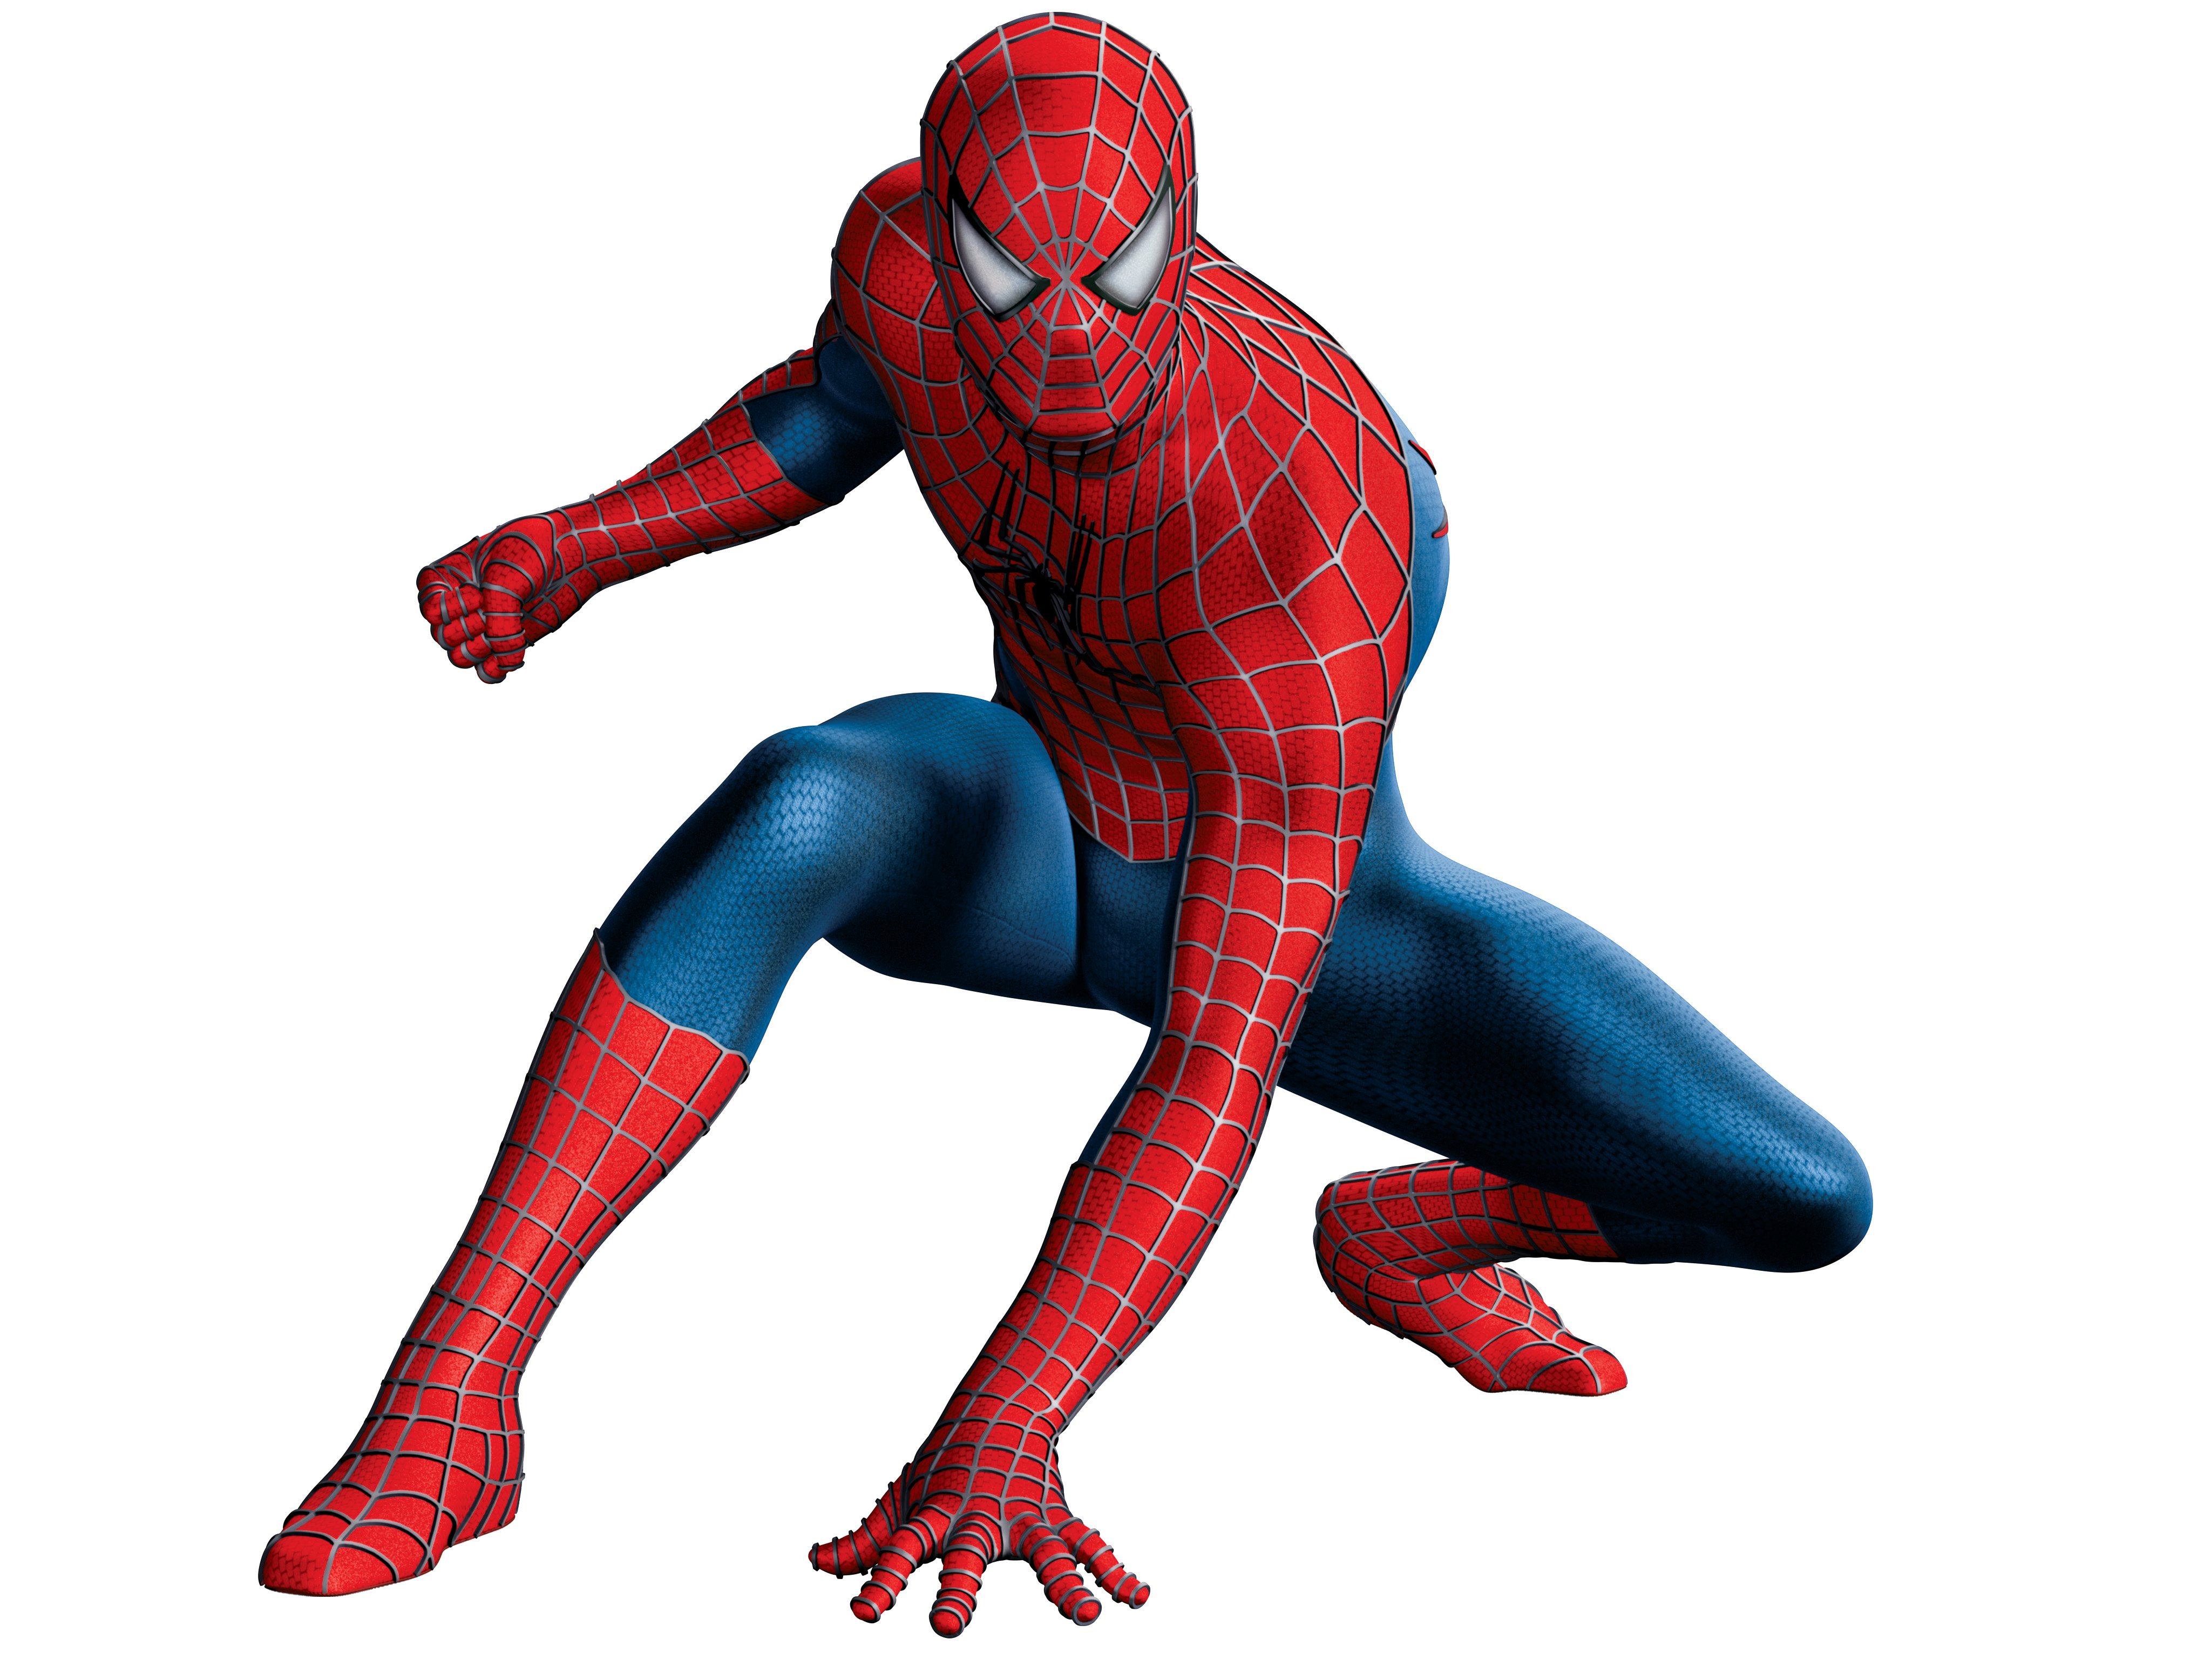 SPIDER MAN superhero marvel spider man action spiderman wallpaper